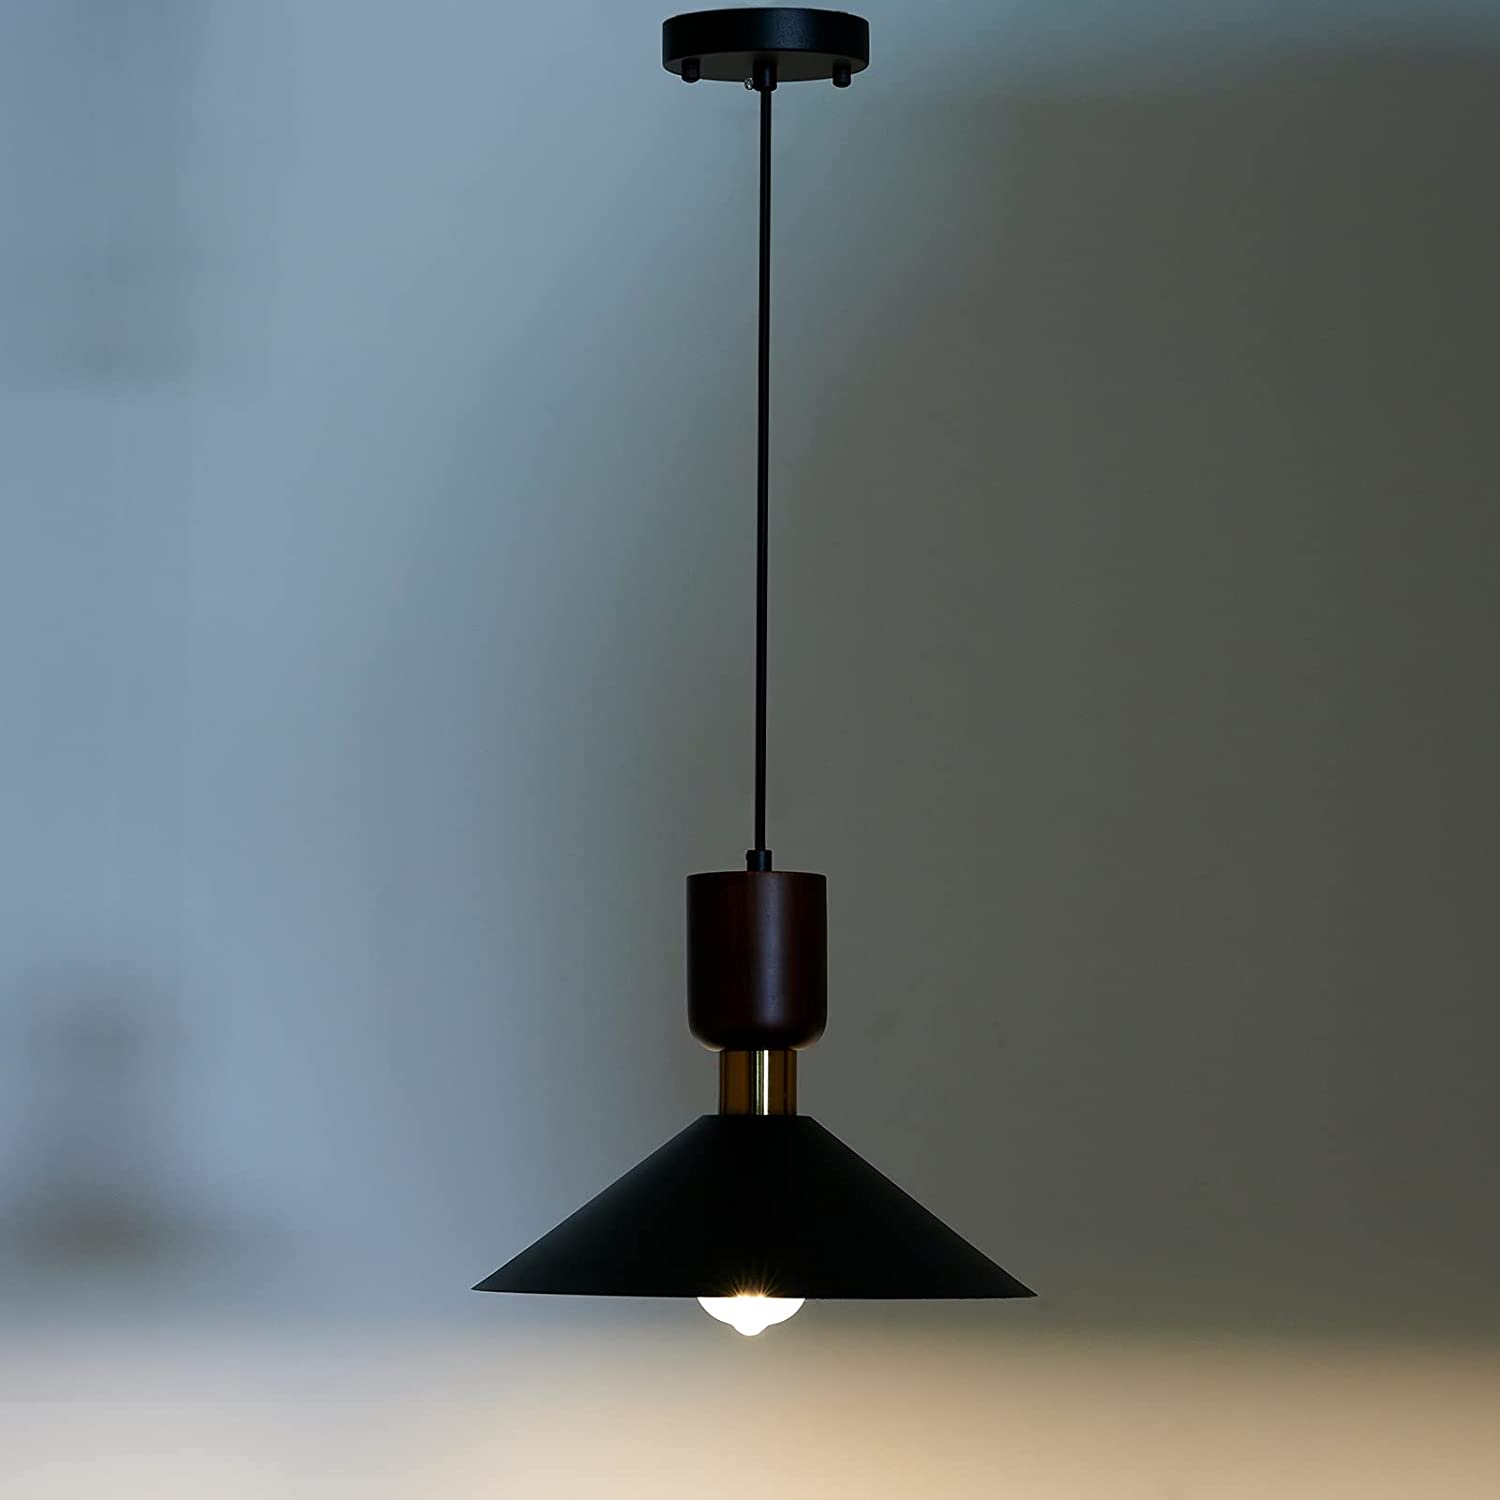 Vintage wood pendant lighting fixture black hanging lamp for kitchen